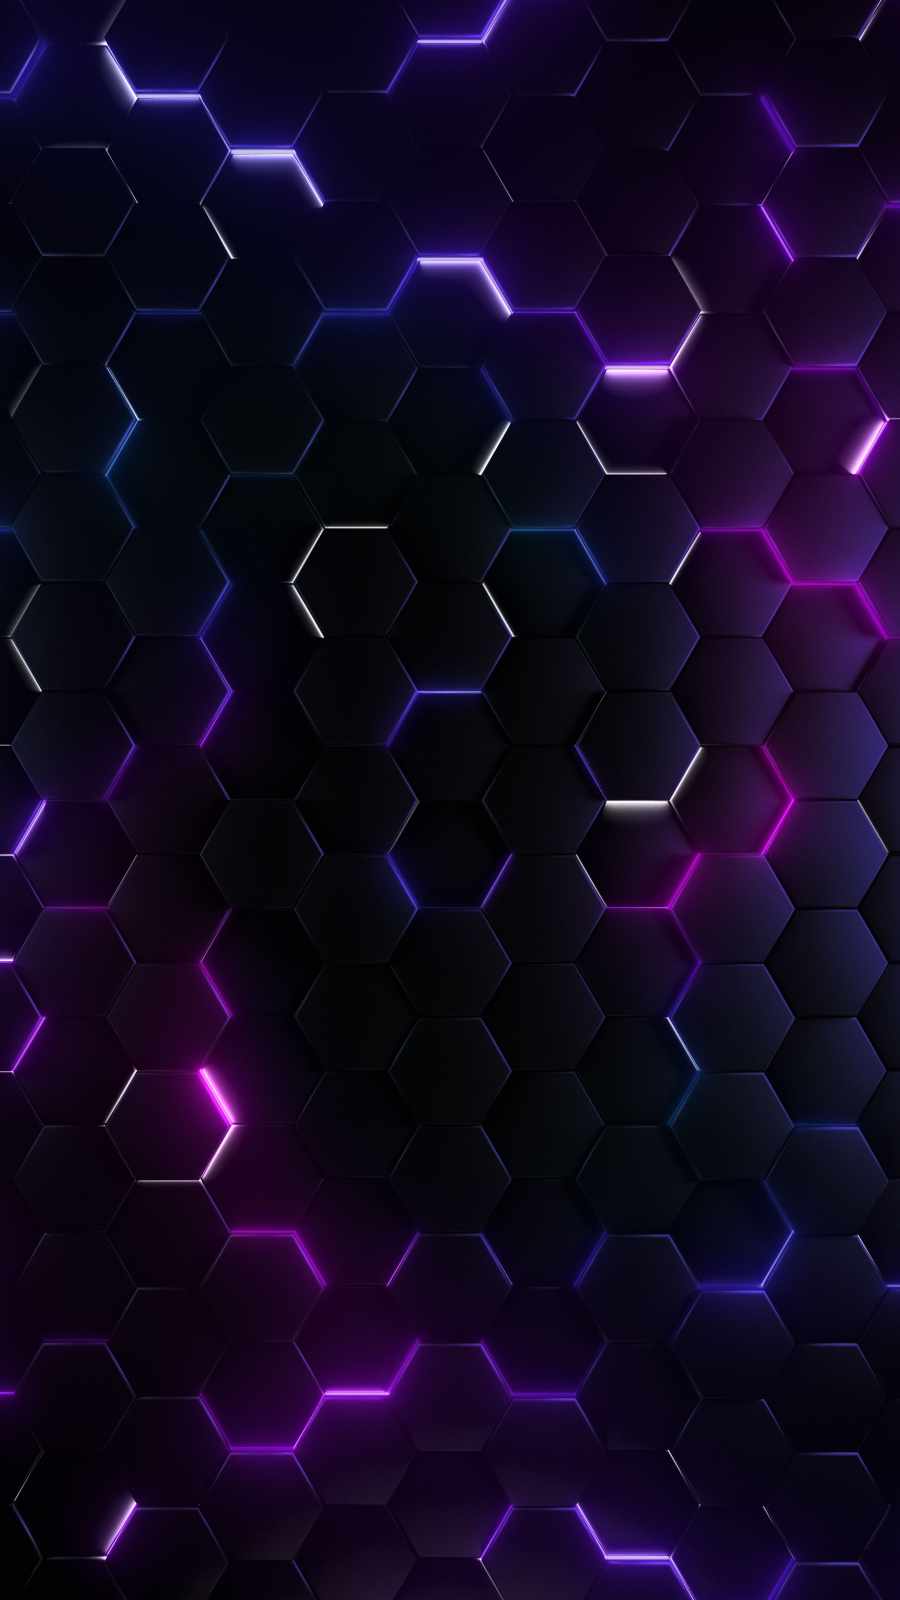 Hexagon Lights iPhone Wallpaper